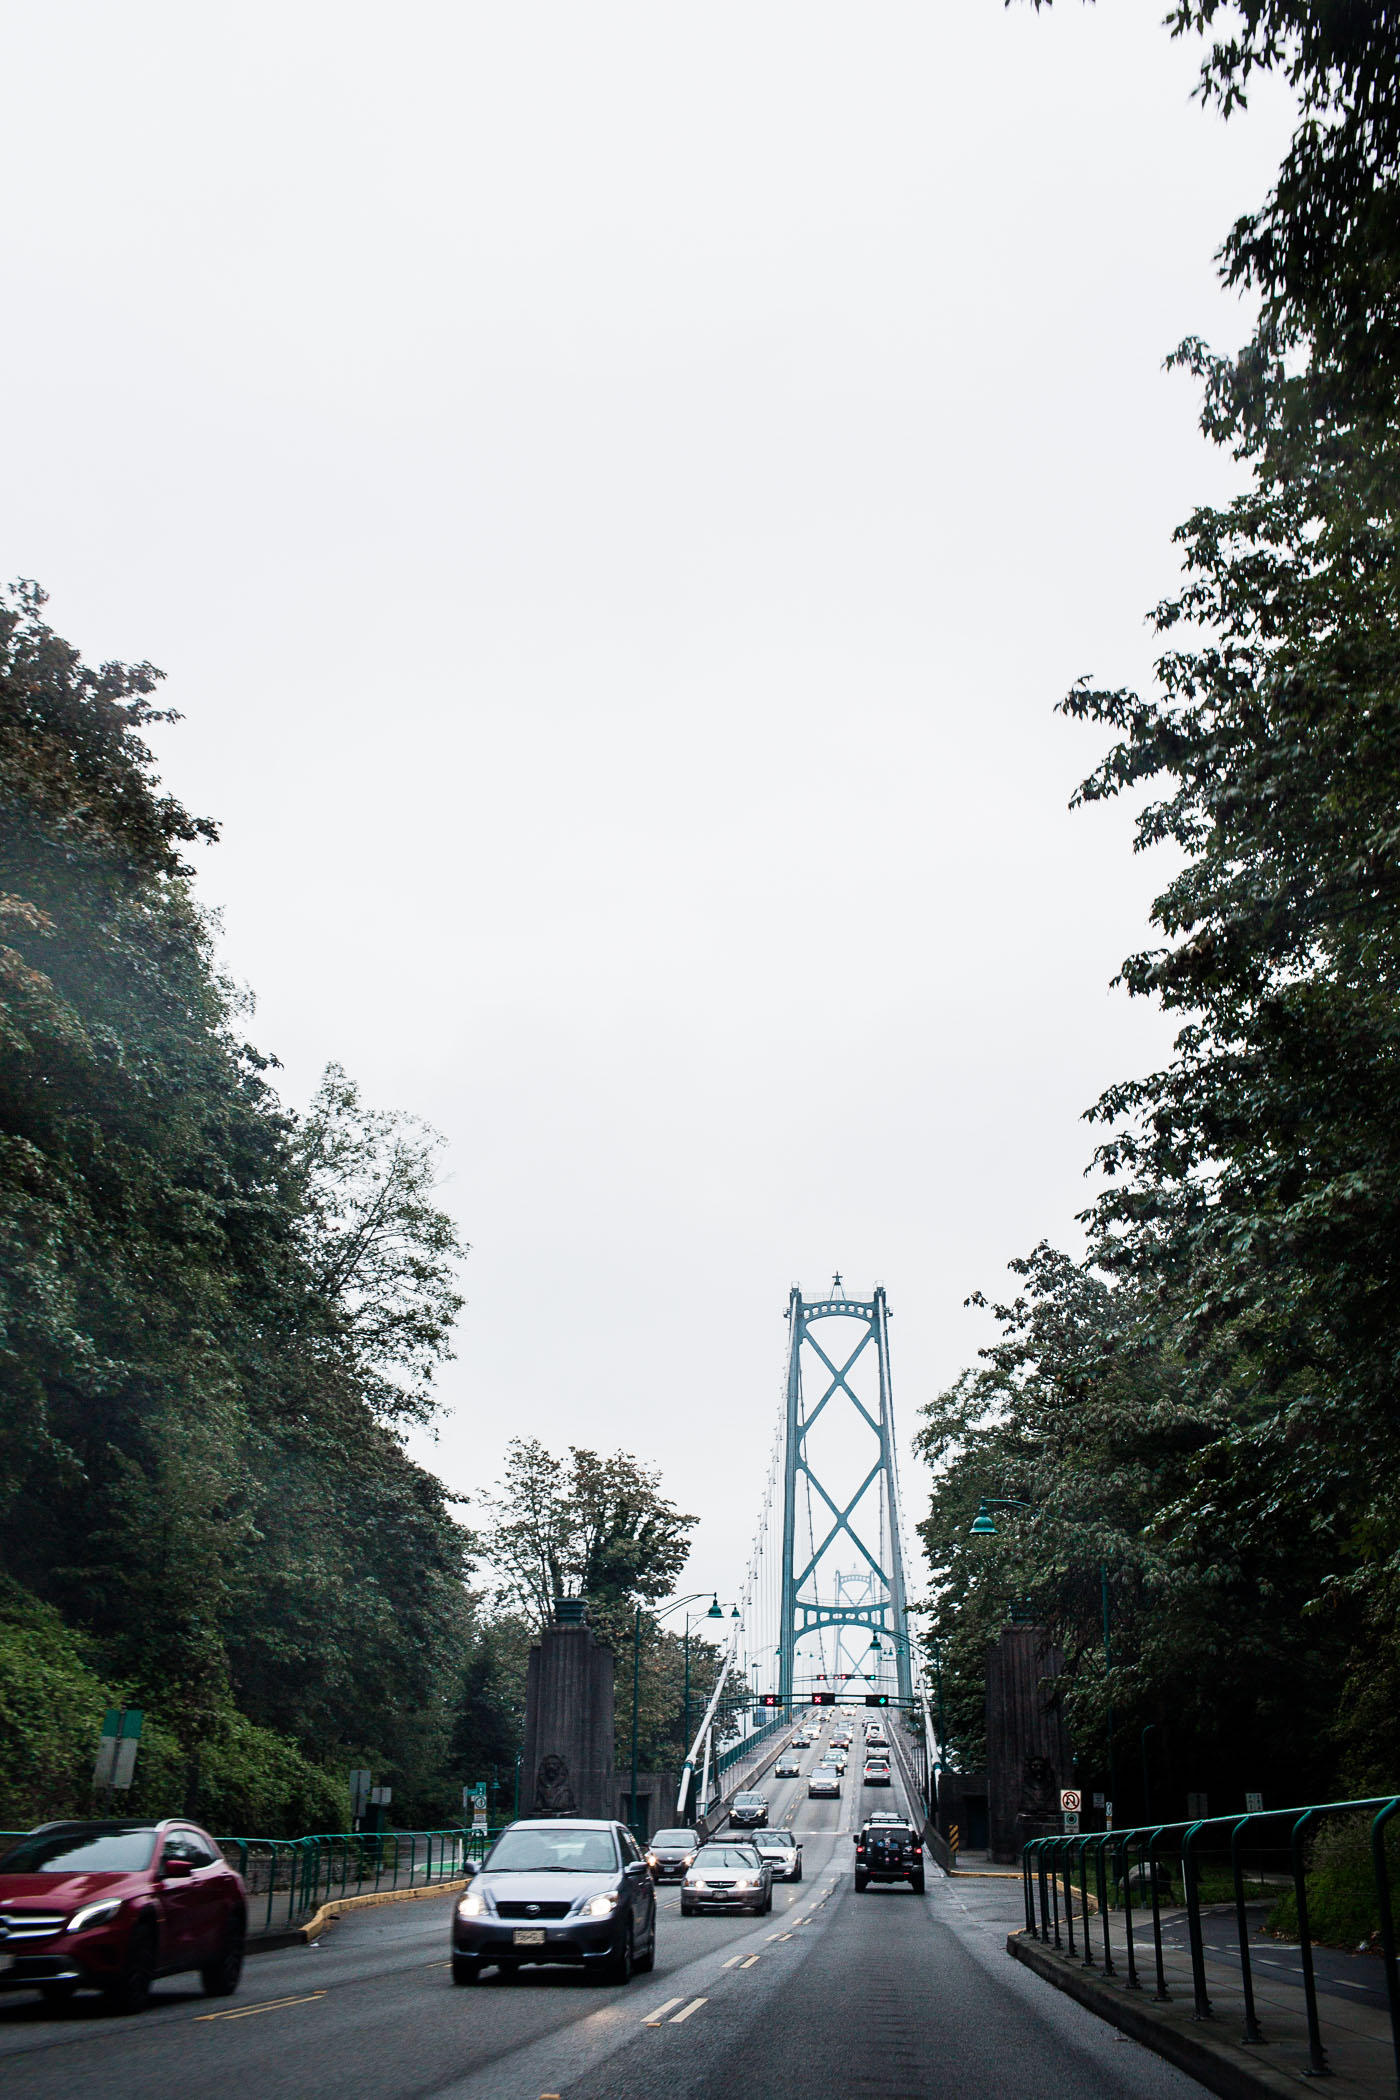 Lions Gate Bridge in Vancouver, BC, Canada